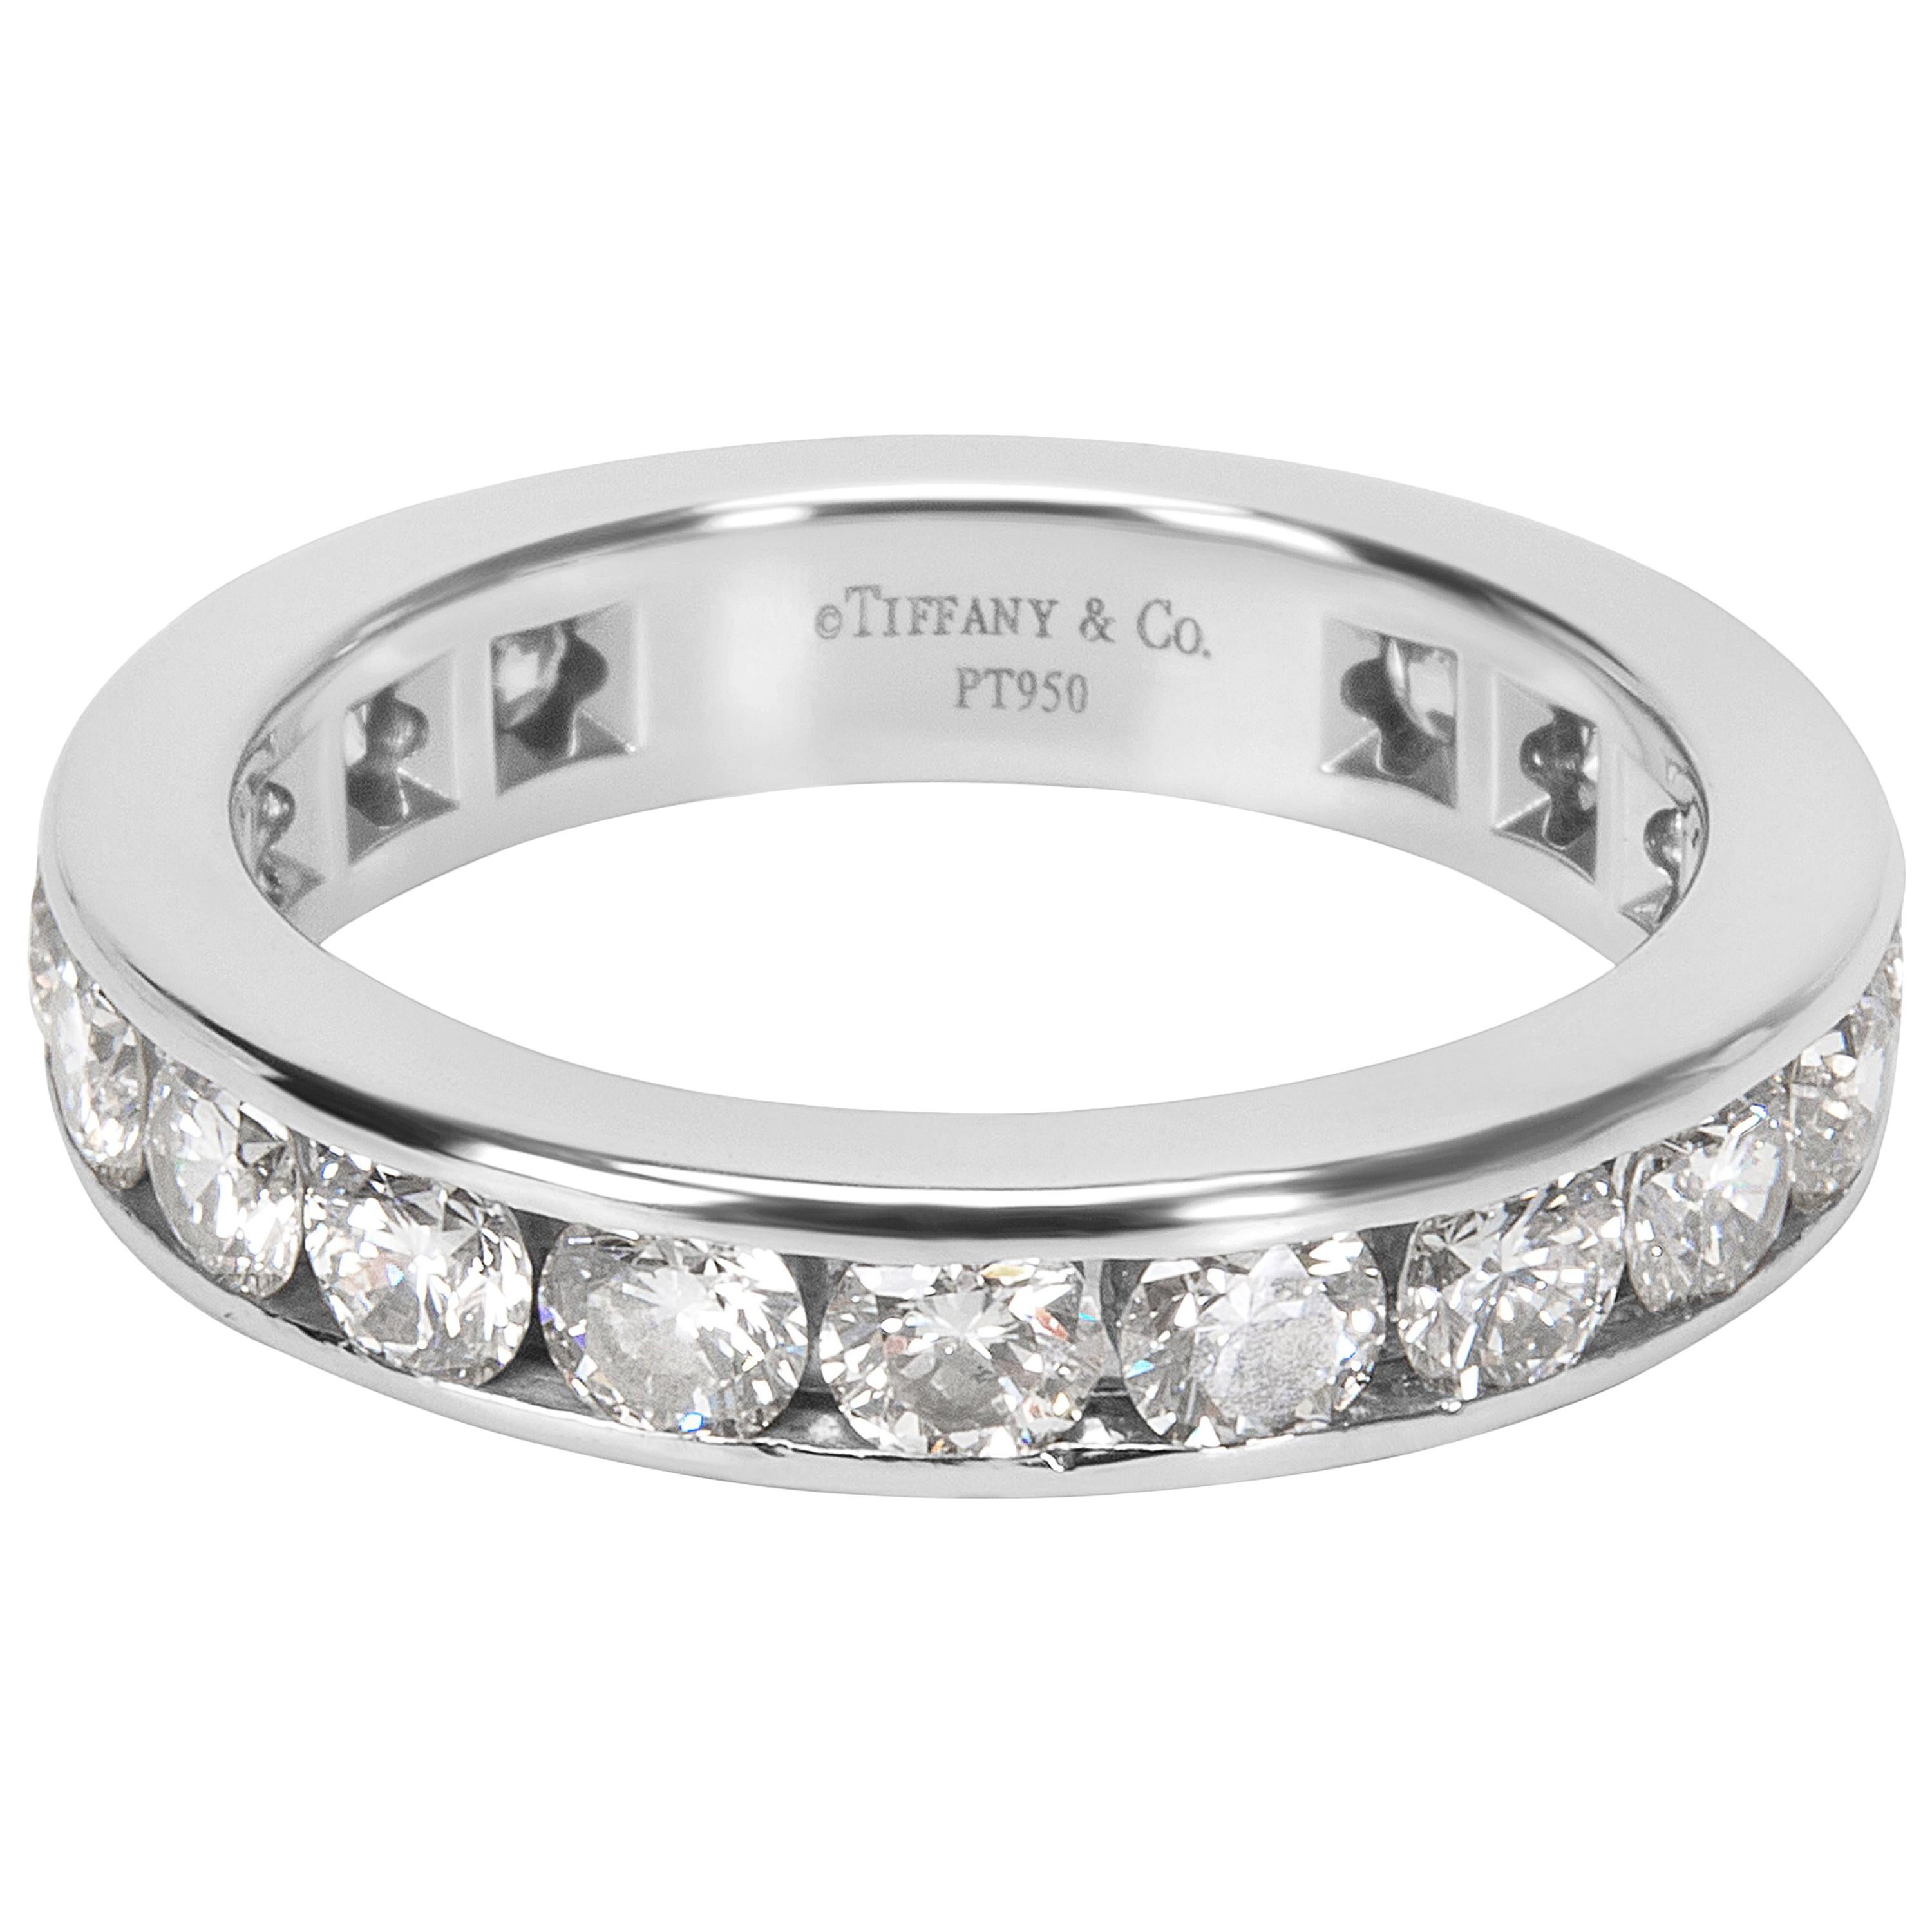 Tiffany & Co. Diamond Eternity Band in Platinum 1.80 Carat